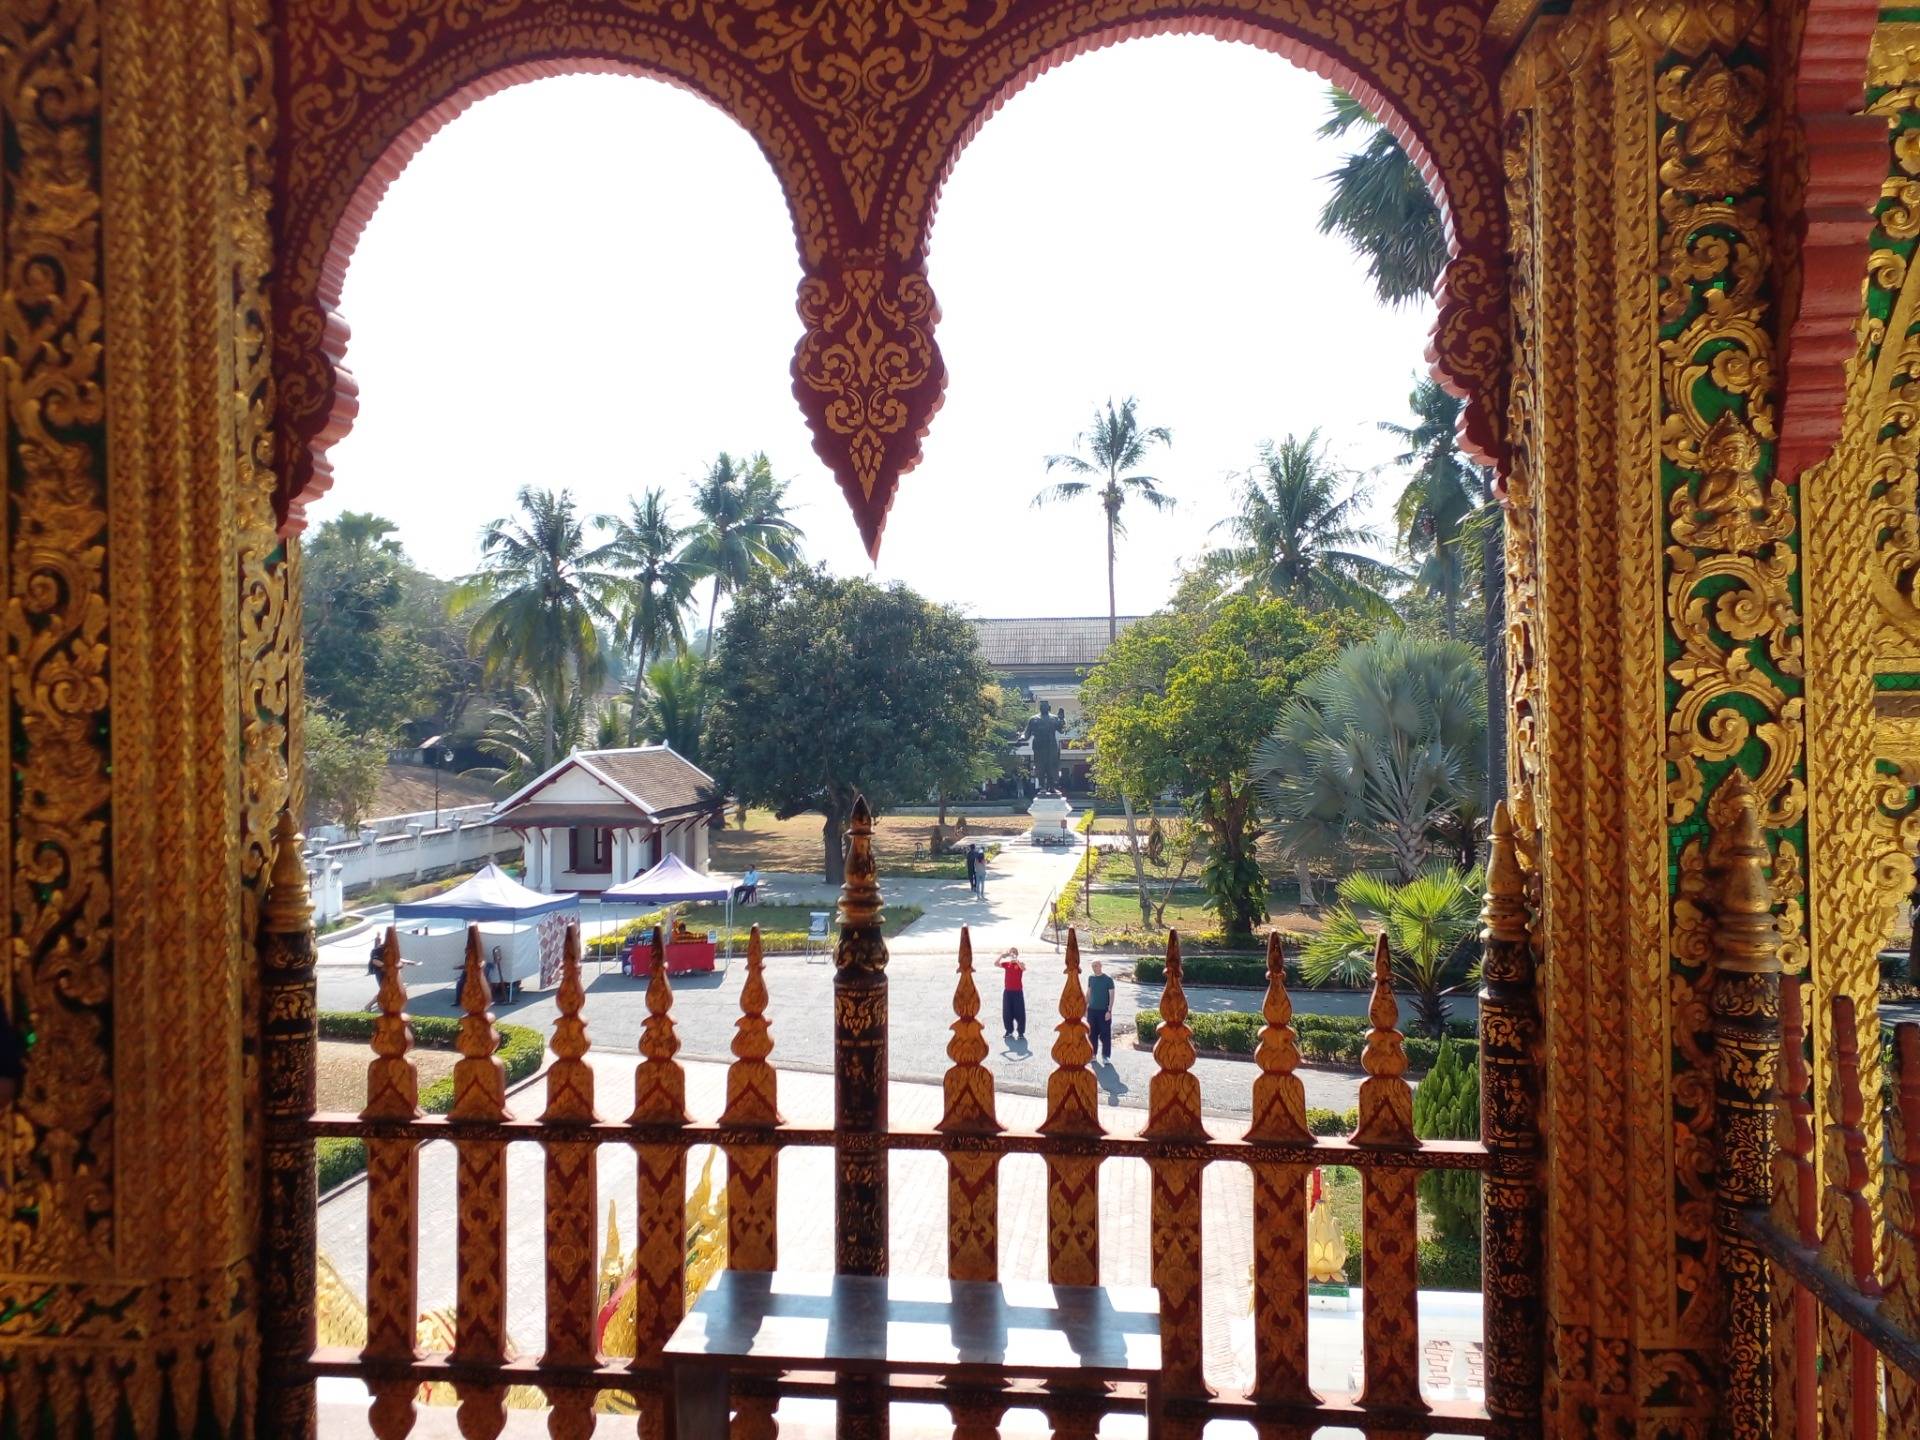 The Royal Palace Museum in Luang Prabang